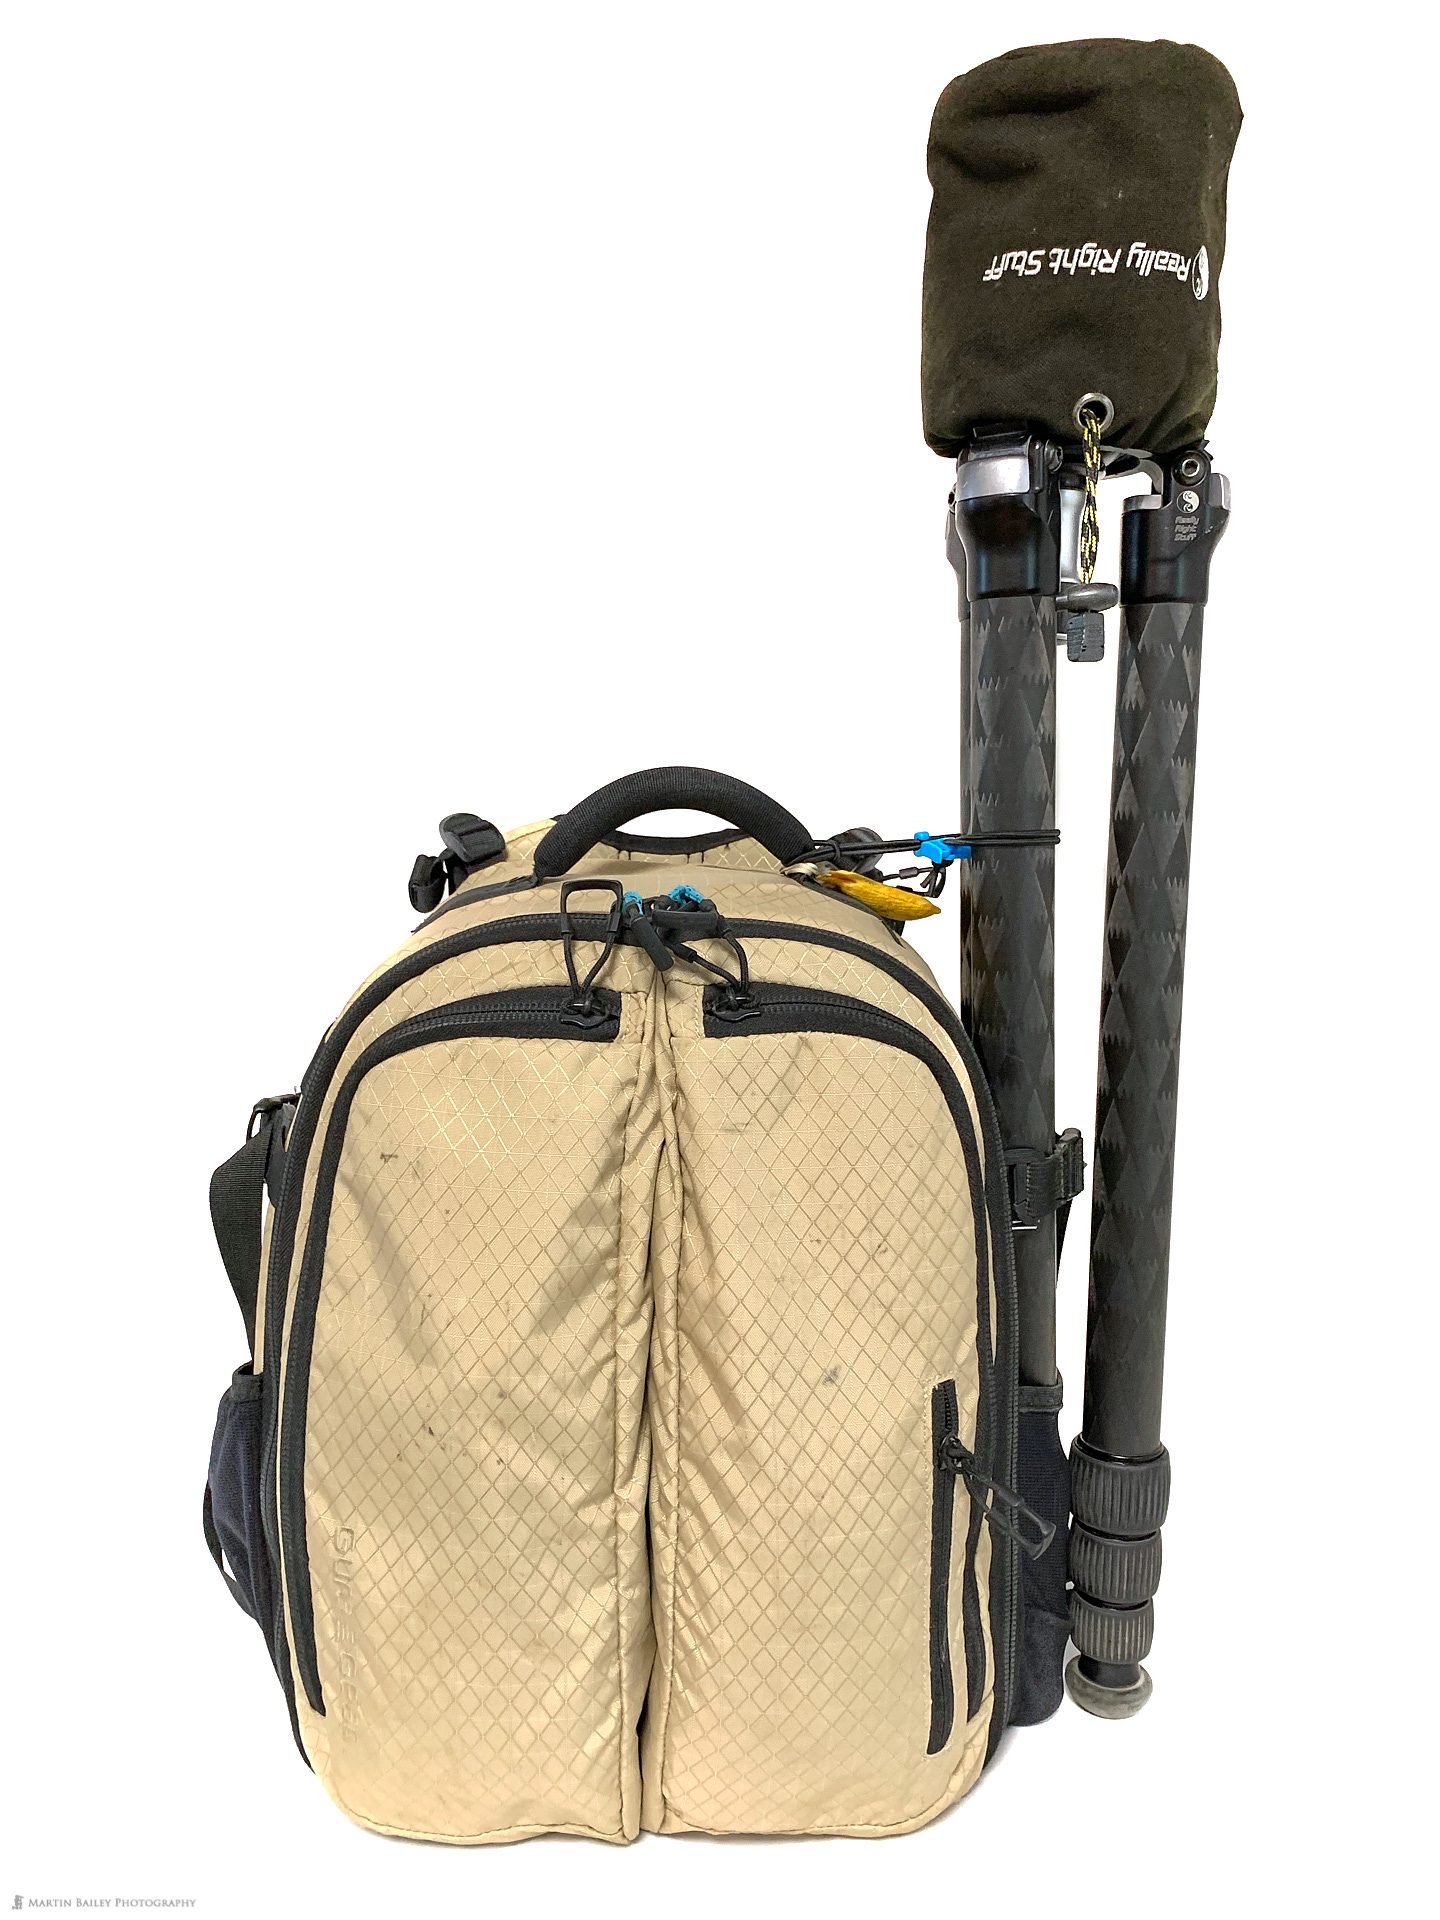 Martin's 18L Gura Gear Bataflae Camera Bag with RRS Tripod